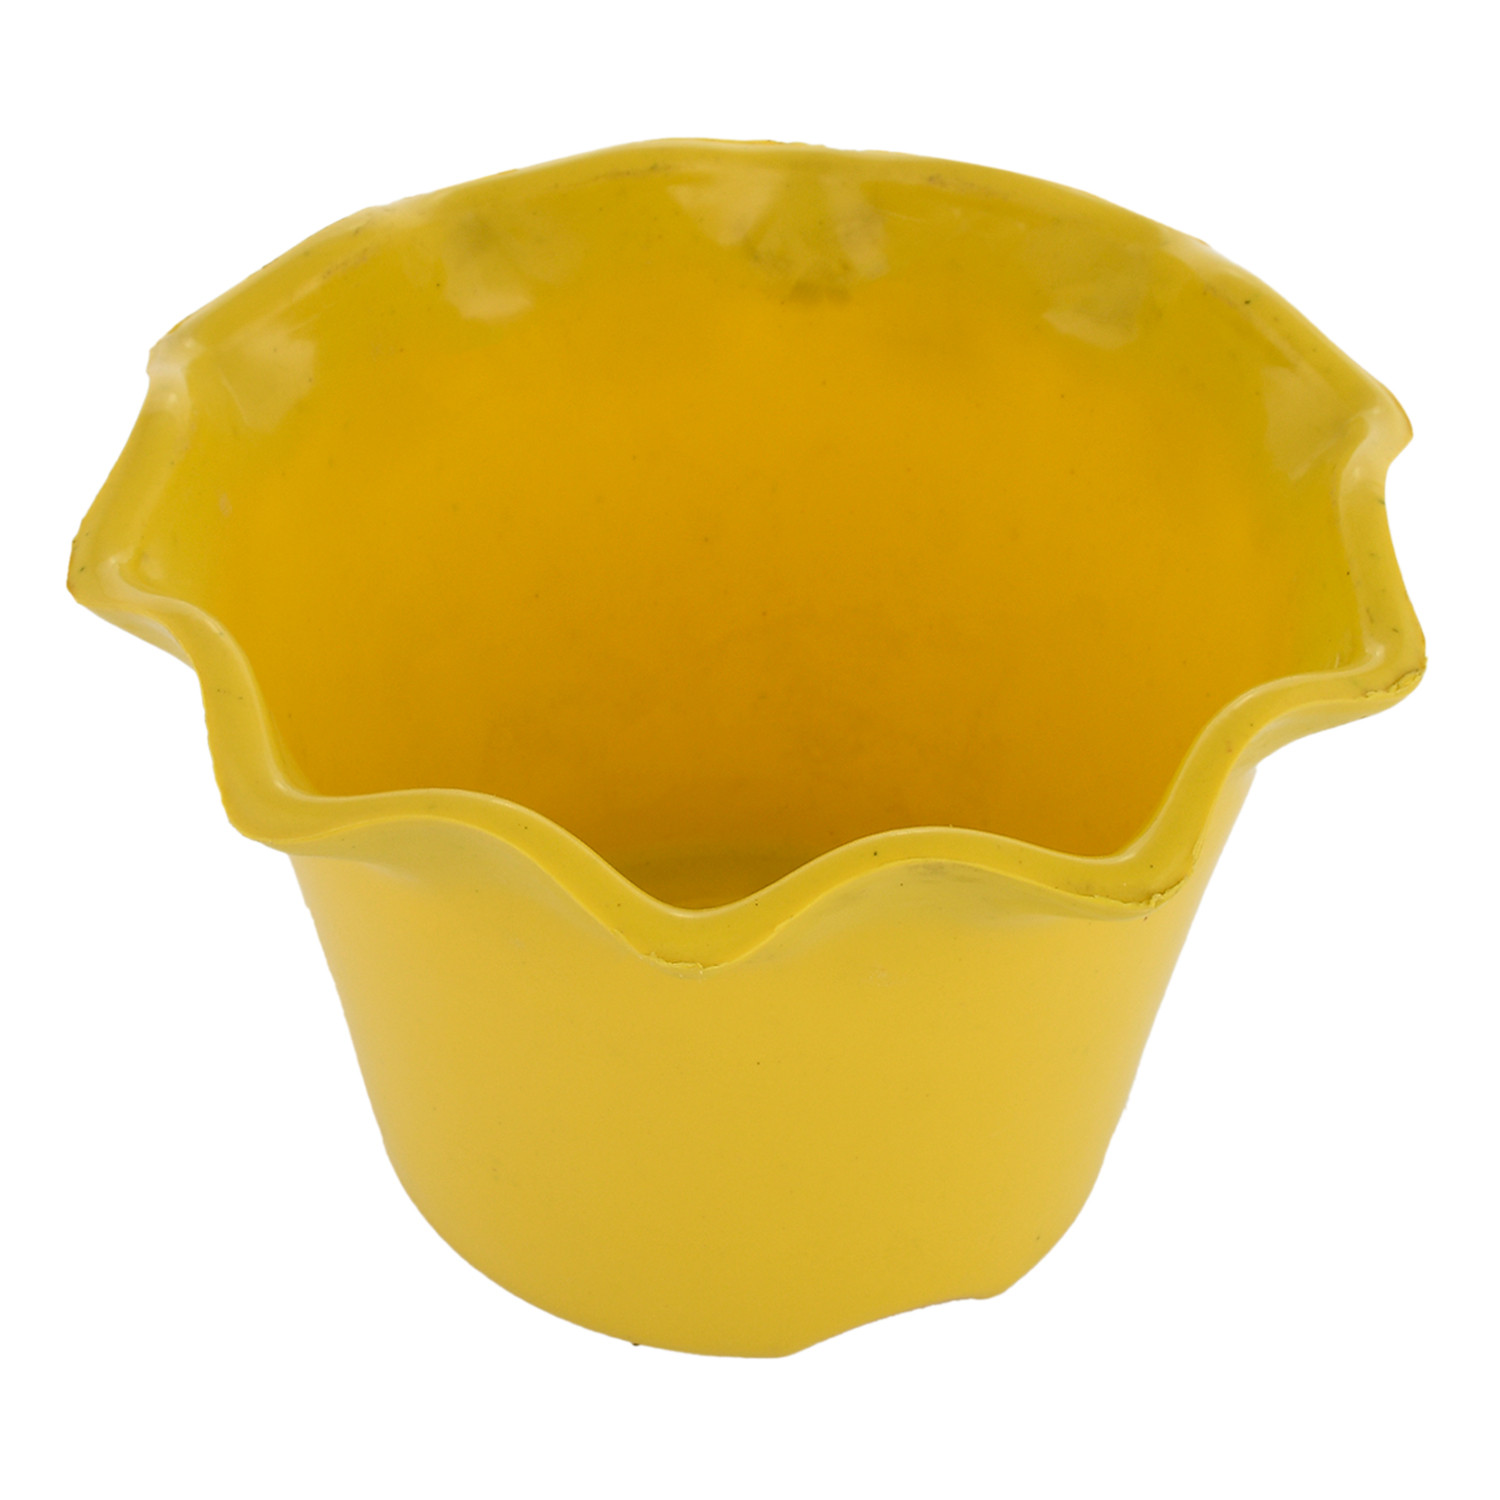 Kuber Industries Blossom Flower Pot|Durable Plastic Flower Pots|Planters for Home Décor|Garden|Living Room|Balcony (Yellow)